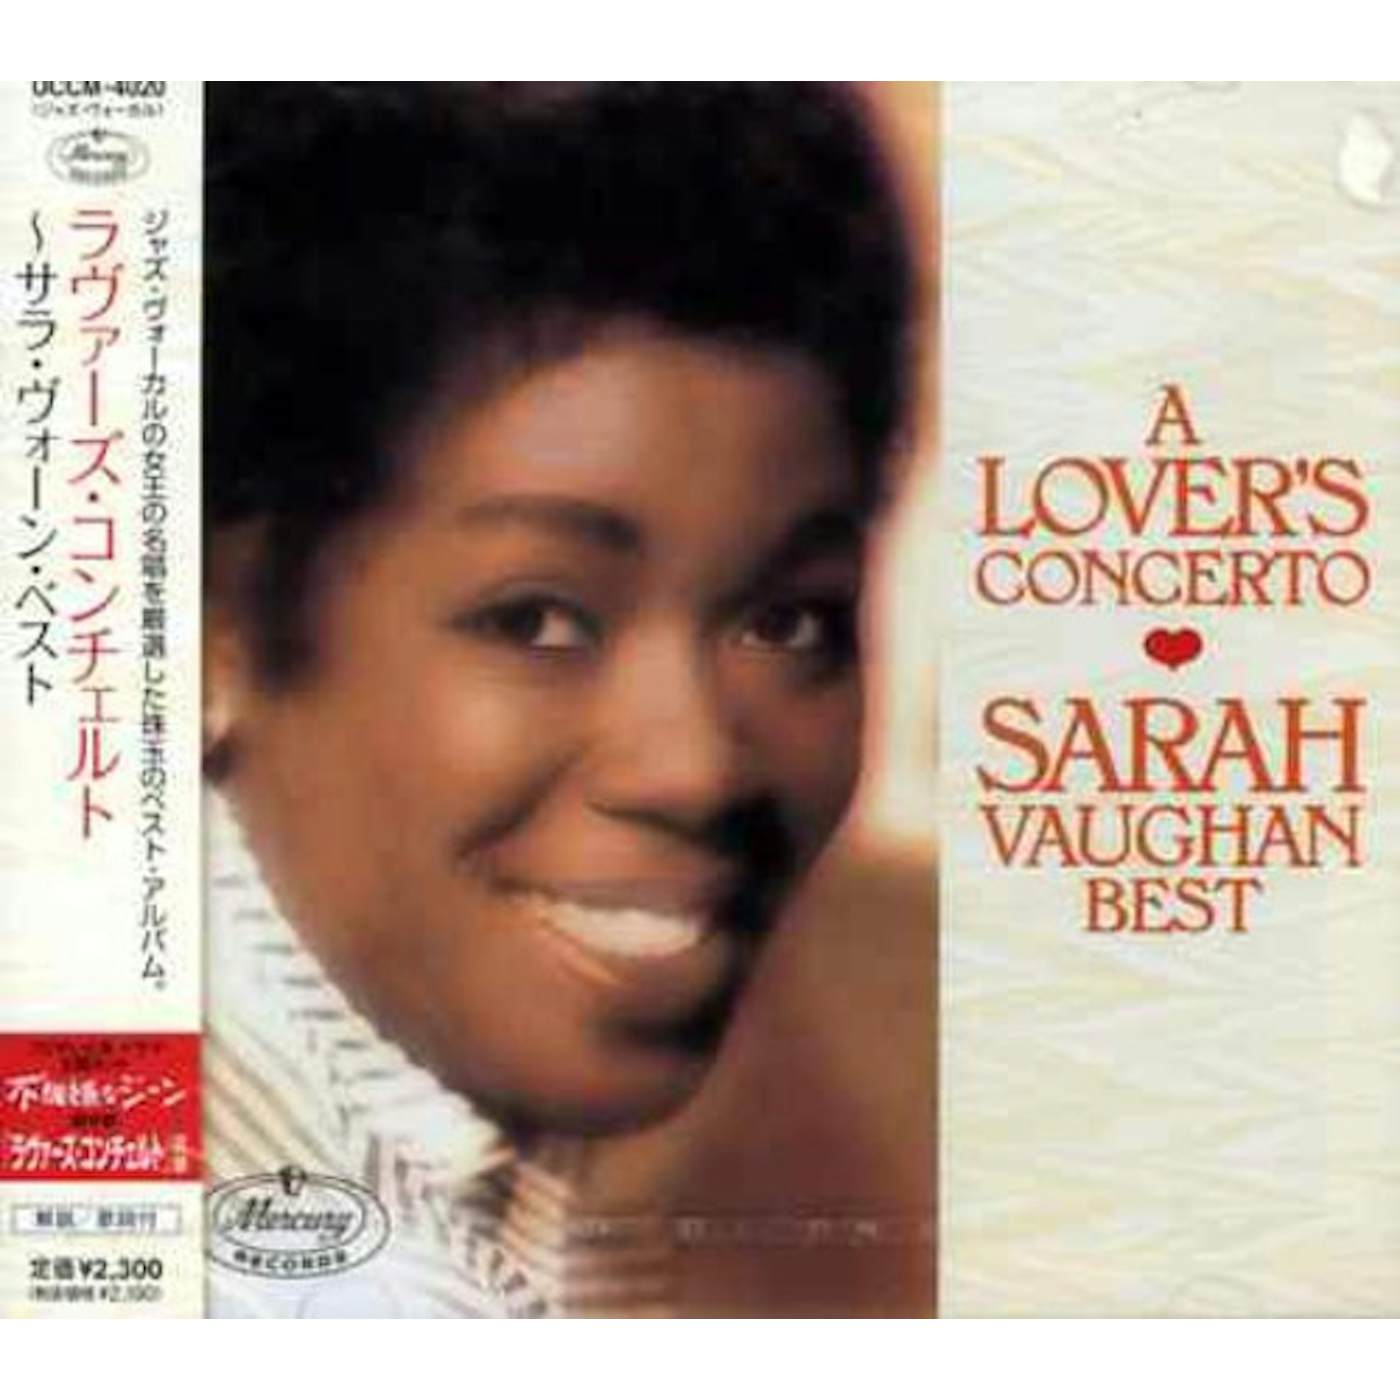 Sarah Vaughan LOVER'S CONCERTO - BEST CD